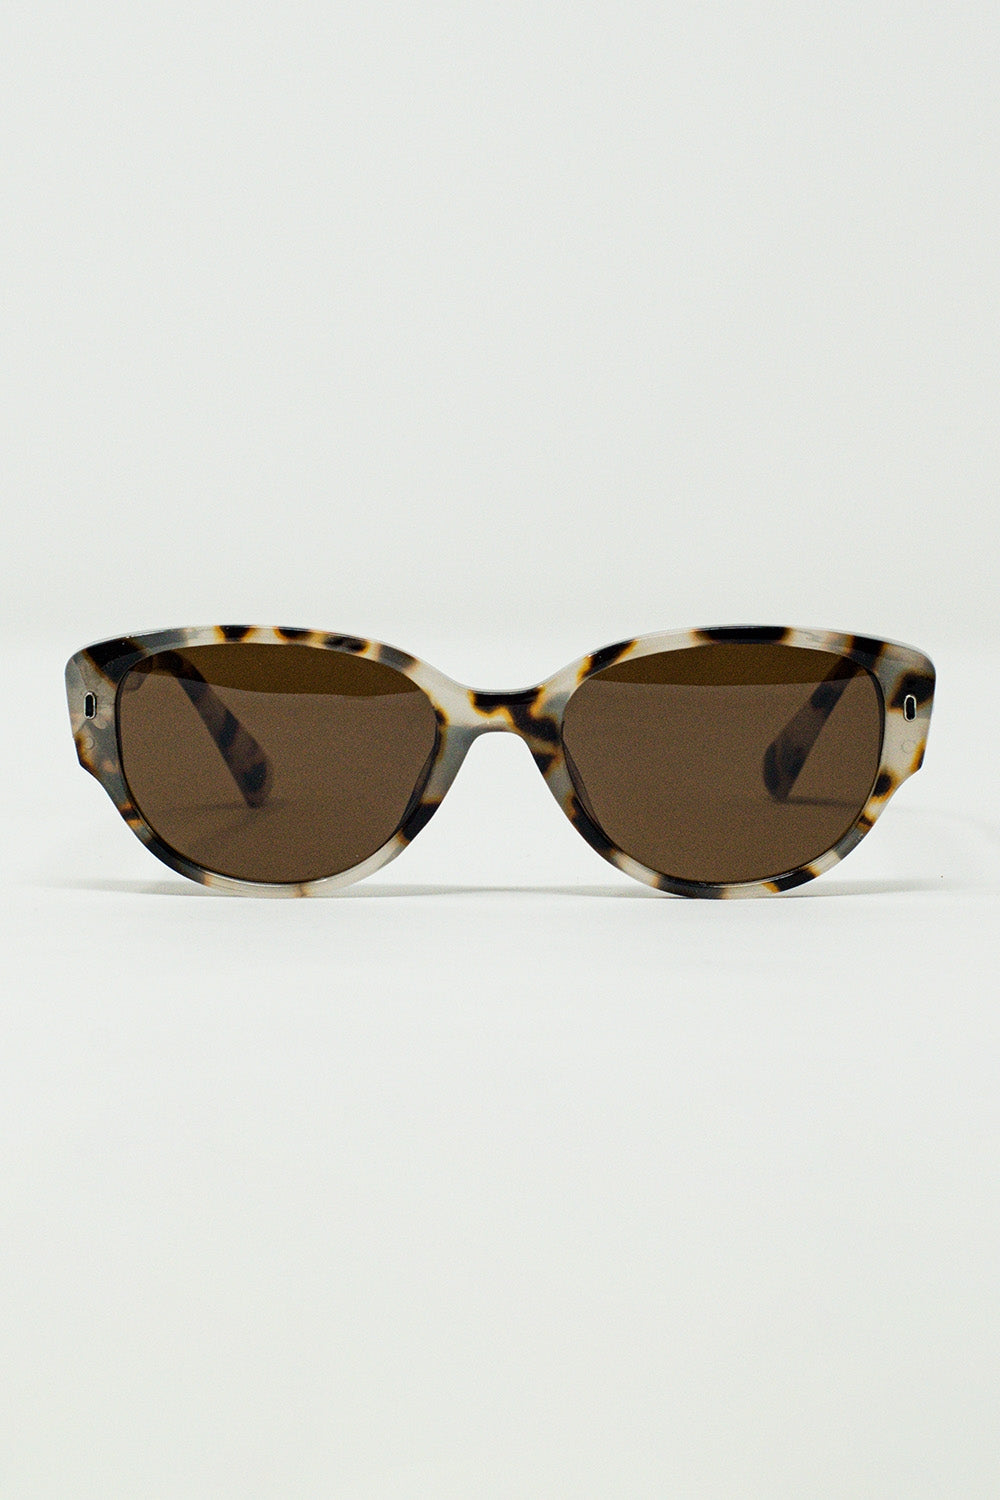 Q2 Oval Sunglasses In Havana Brown Gradient Color